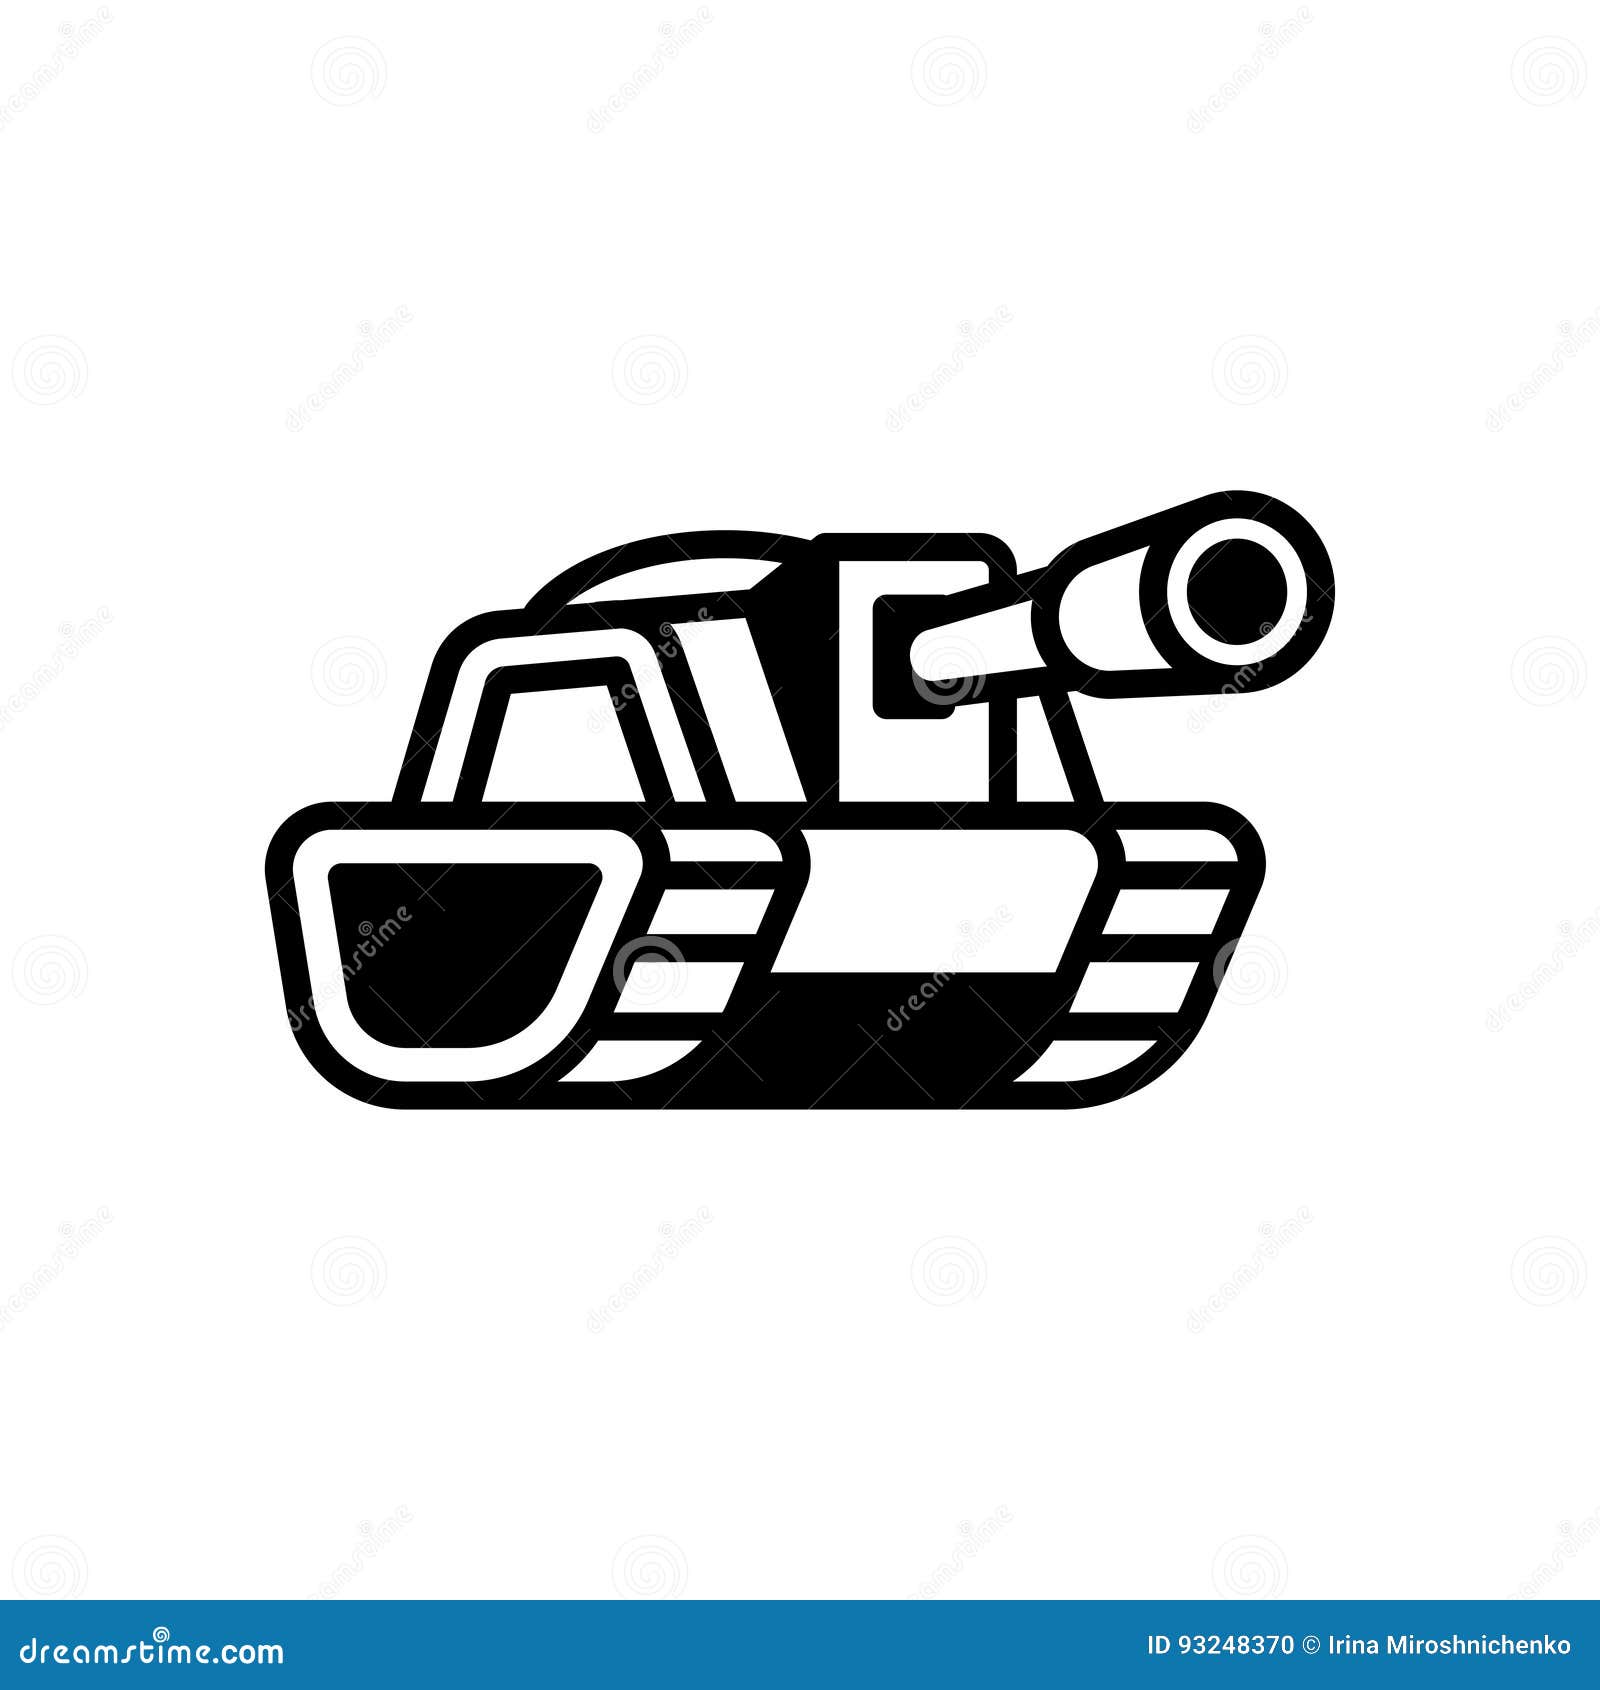 Tank logo illustration stock vector. Illustration of conflict - 93248370